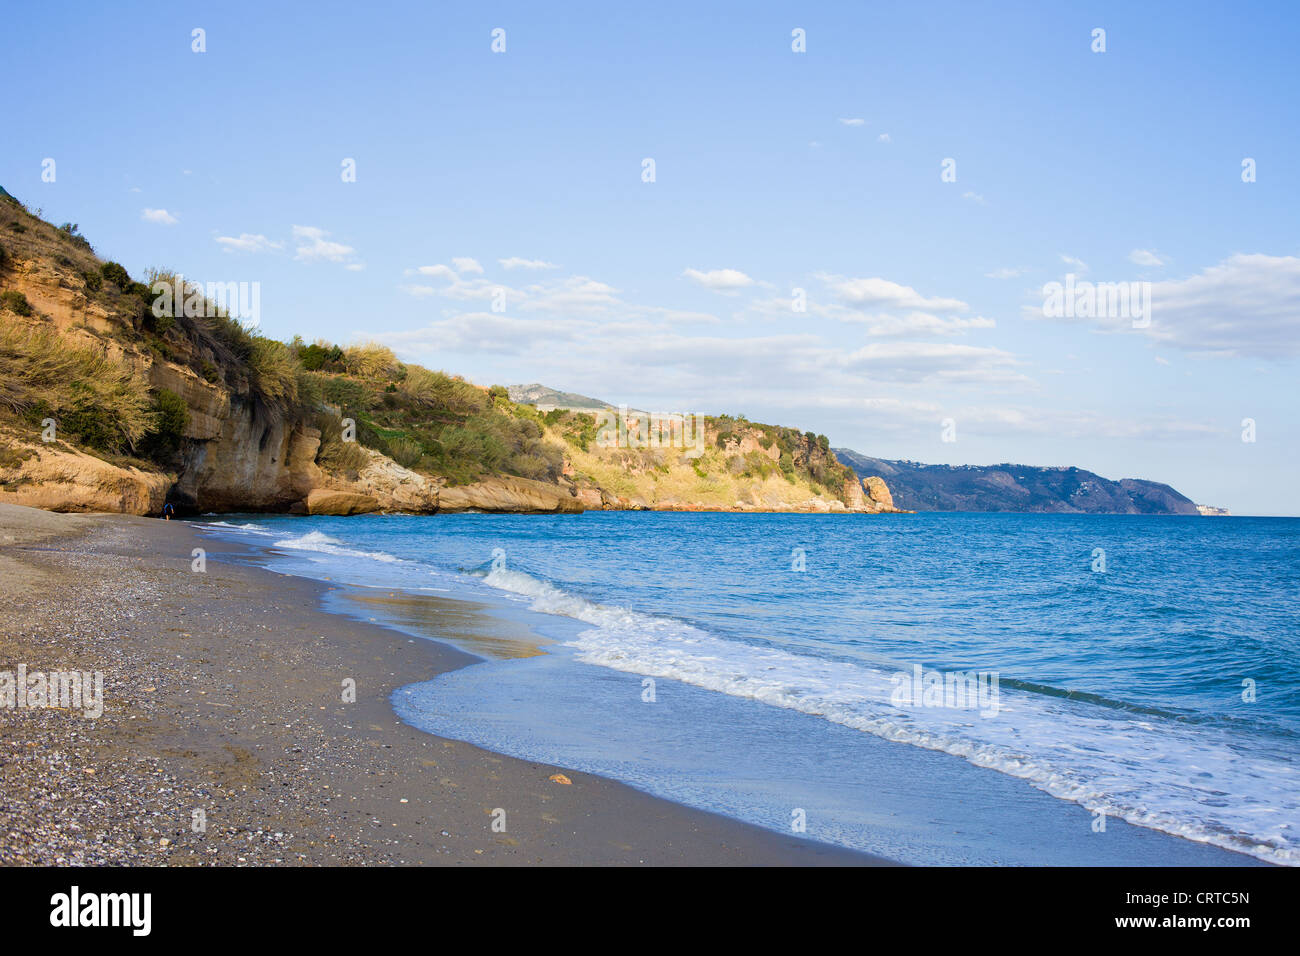 Burriana beach in Nerja, Costa del Sol, Andalucia region, Malaga province, Spain. Stock Photo